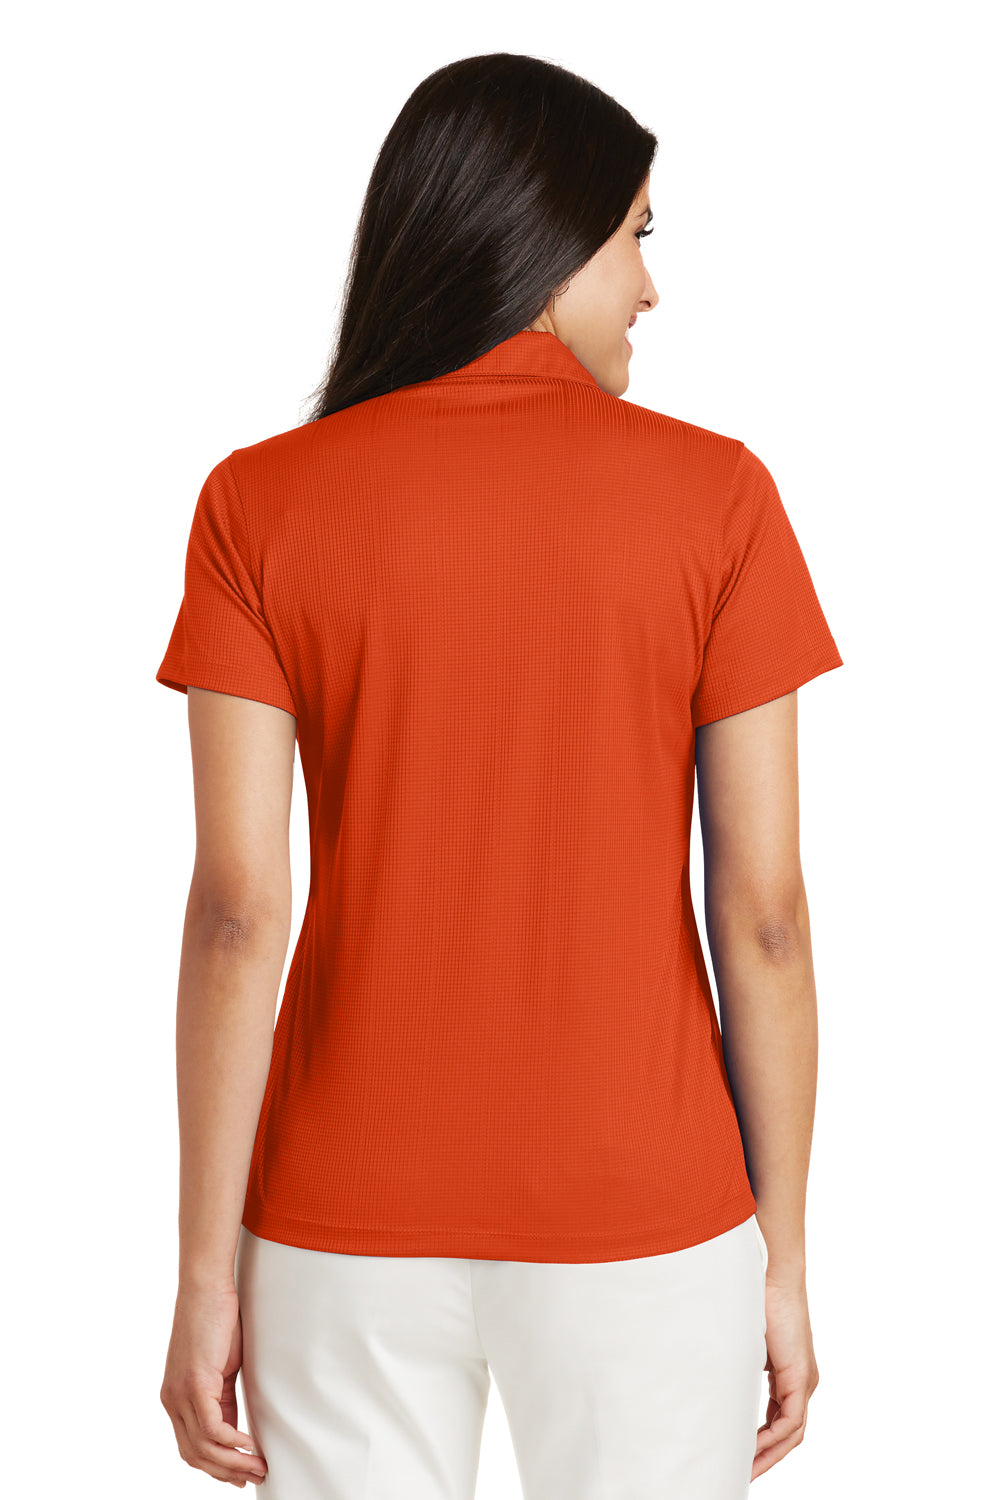 Port Authority L528 Womens Performance Moisture Wicking Short Sleeve Polo Shirt Autumn Orange Back